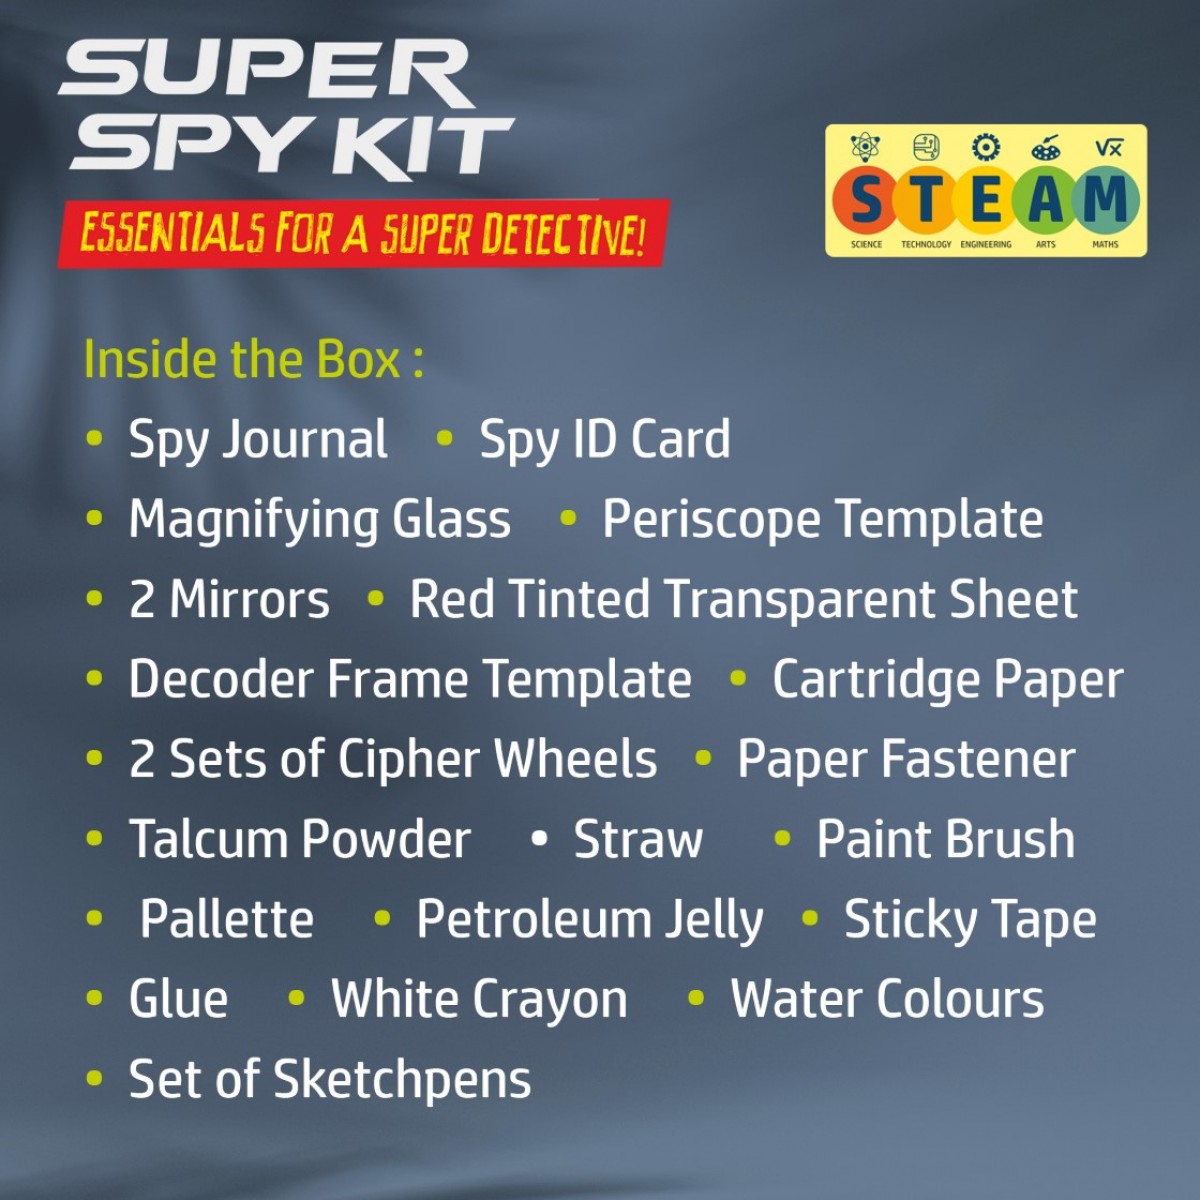 Flo Super Spy Kit science kit for kids Multicolour 8Y+